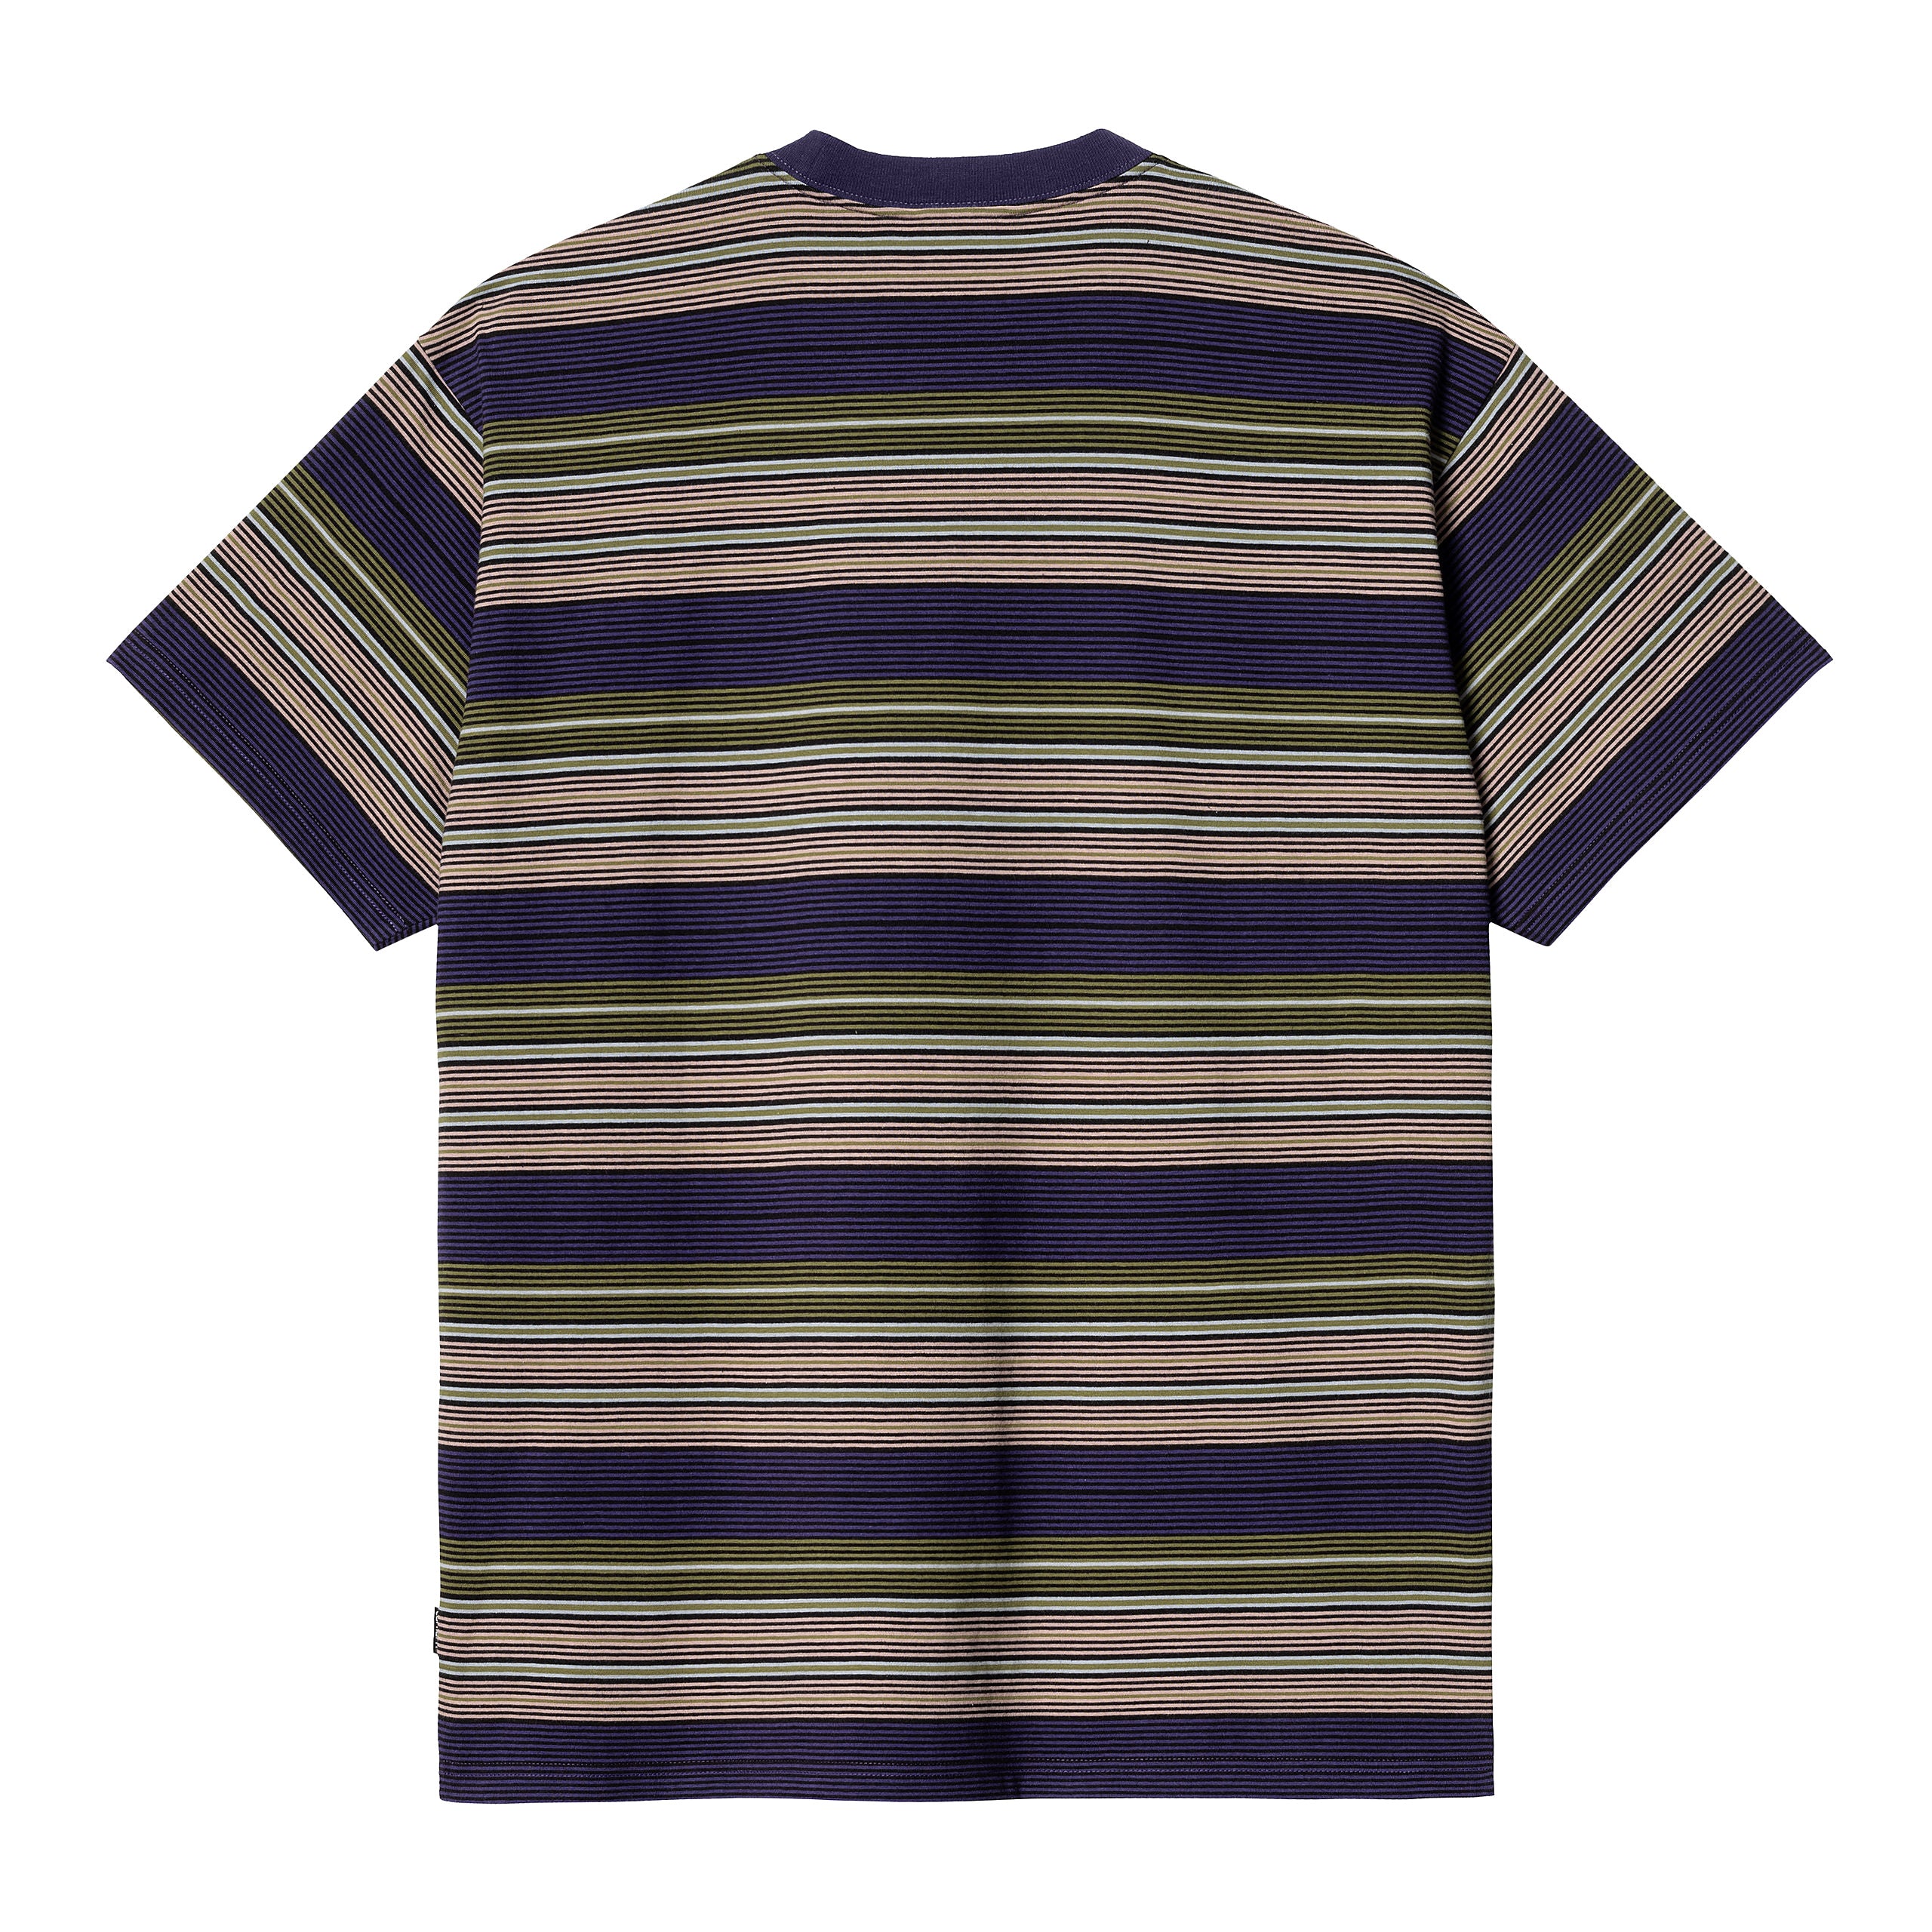 Carhartt WIP Colby Short Sleeve T-shirt - Tyrian